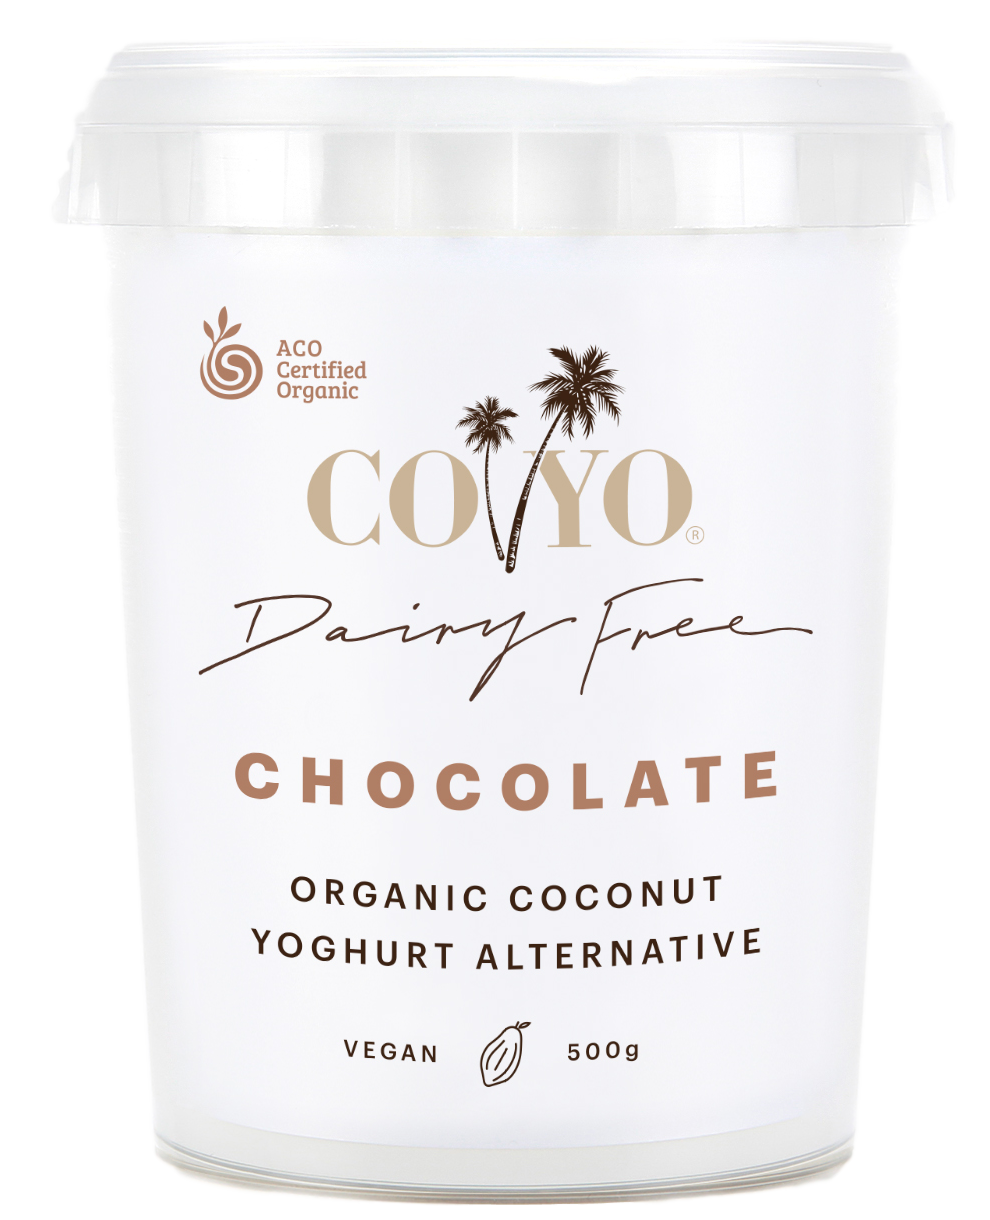 CO YO Chocolate Coconut yoghurt